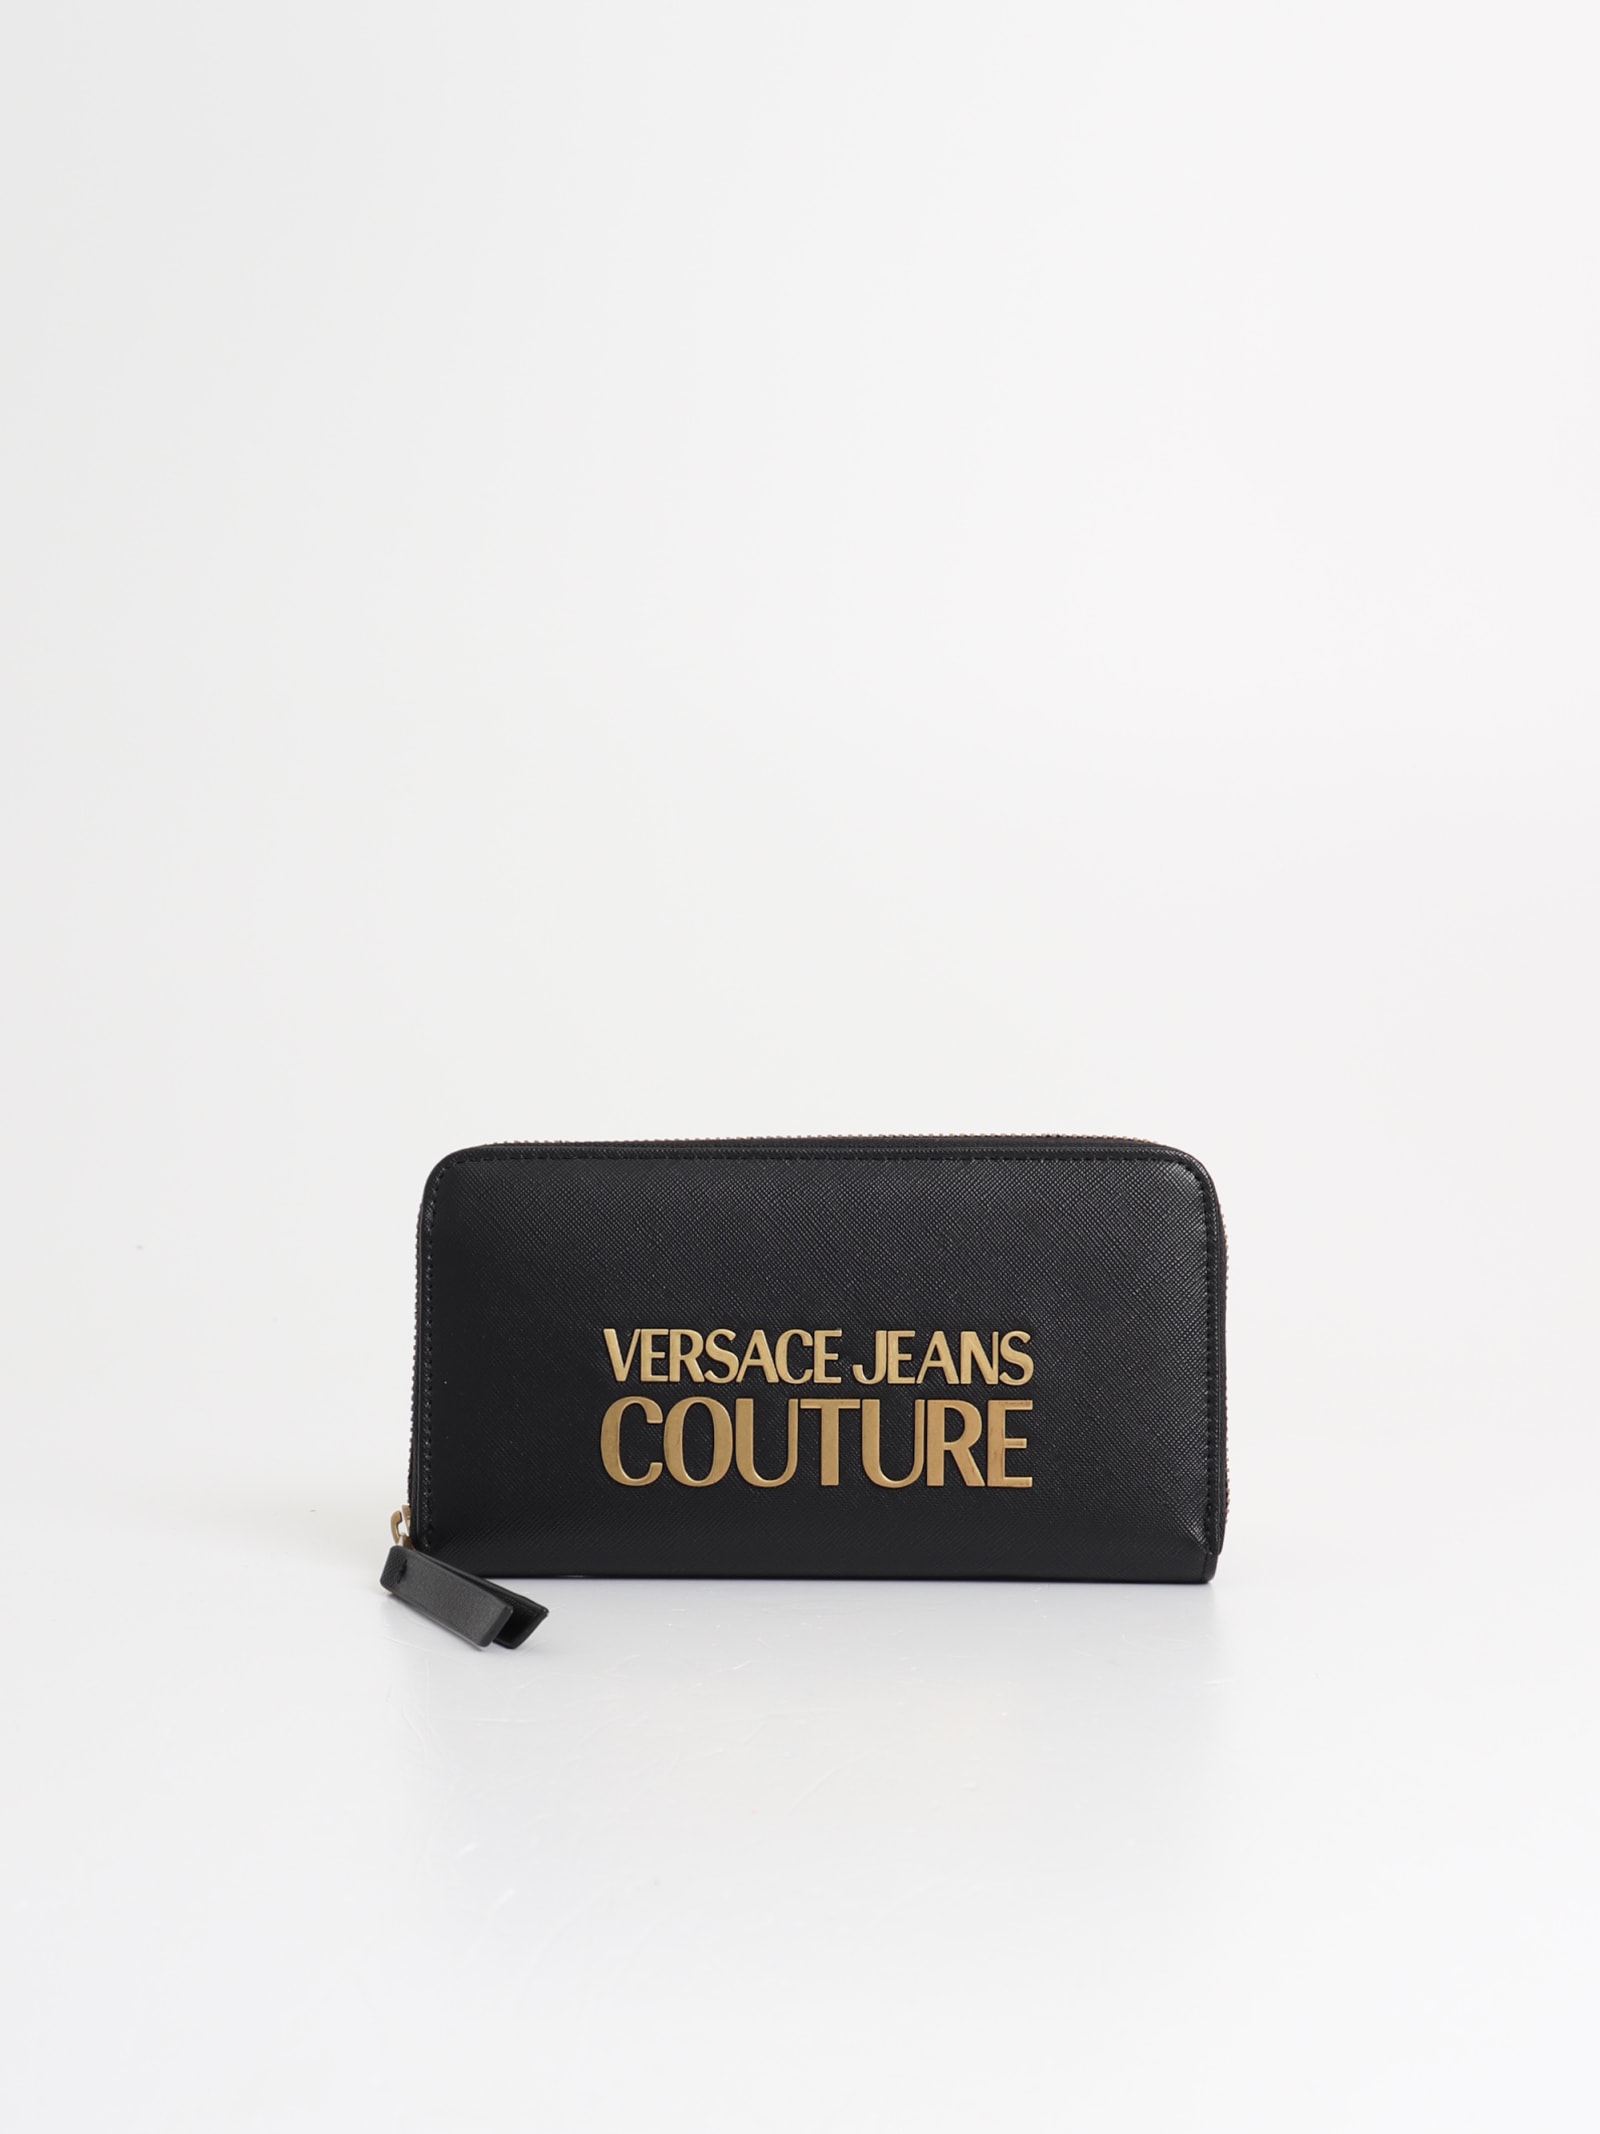 Versace Jeans Couture Range L Logo Lock 10 Wallet Wallet